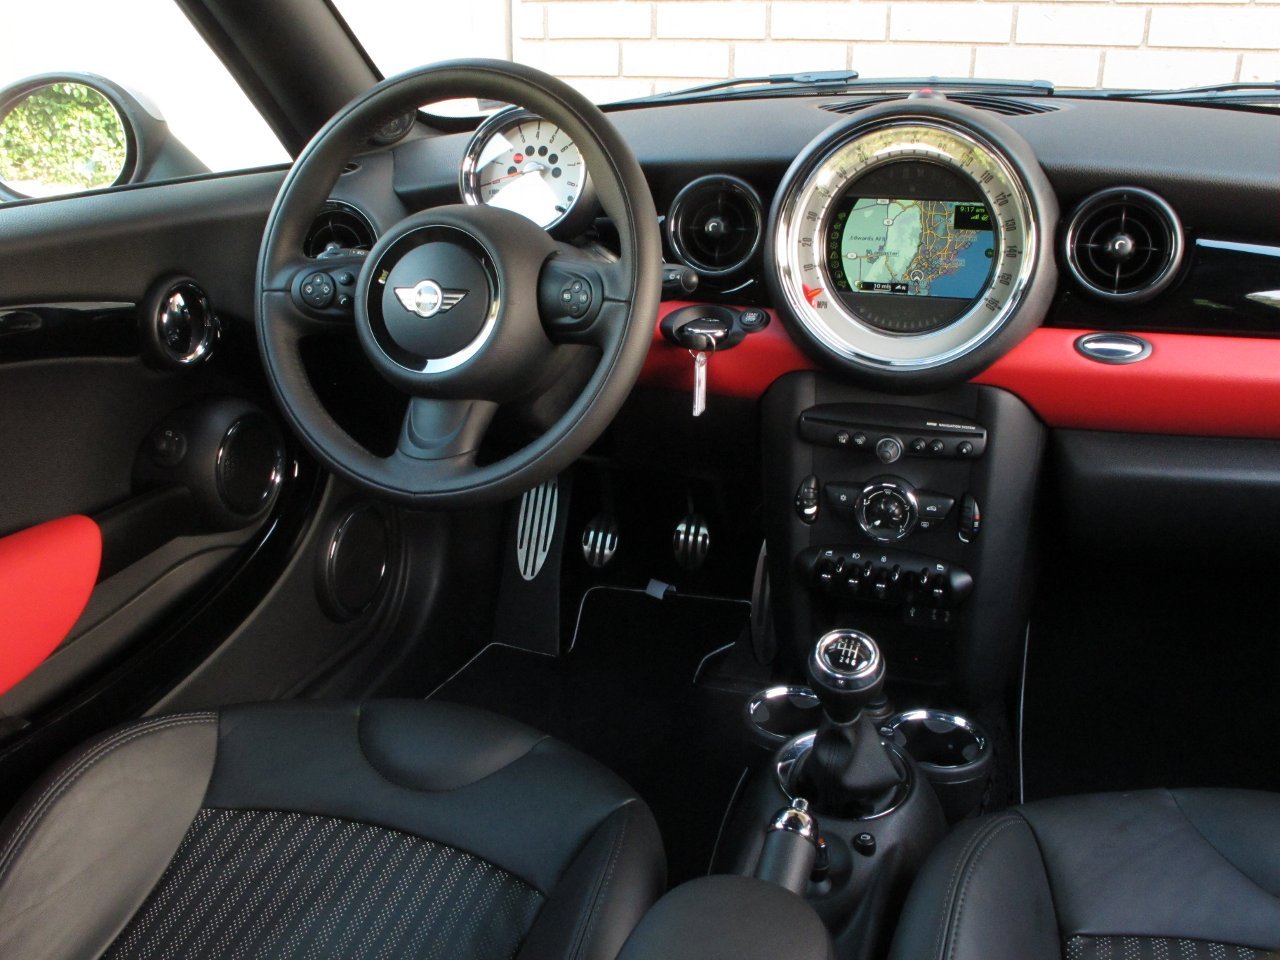 2012 MINI Cooper S Coupe test drive - MINI Coupe review